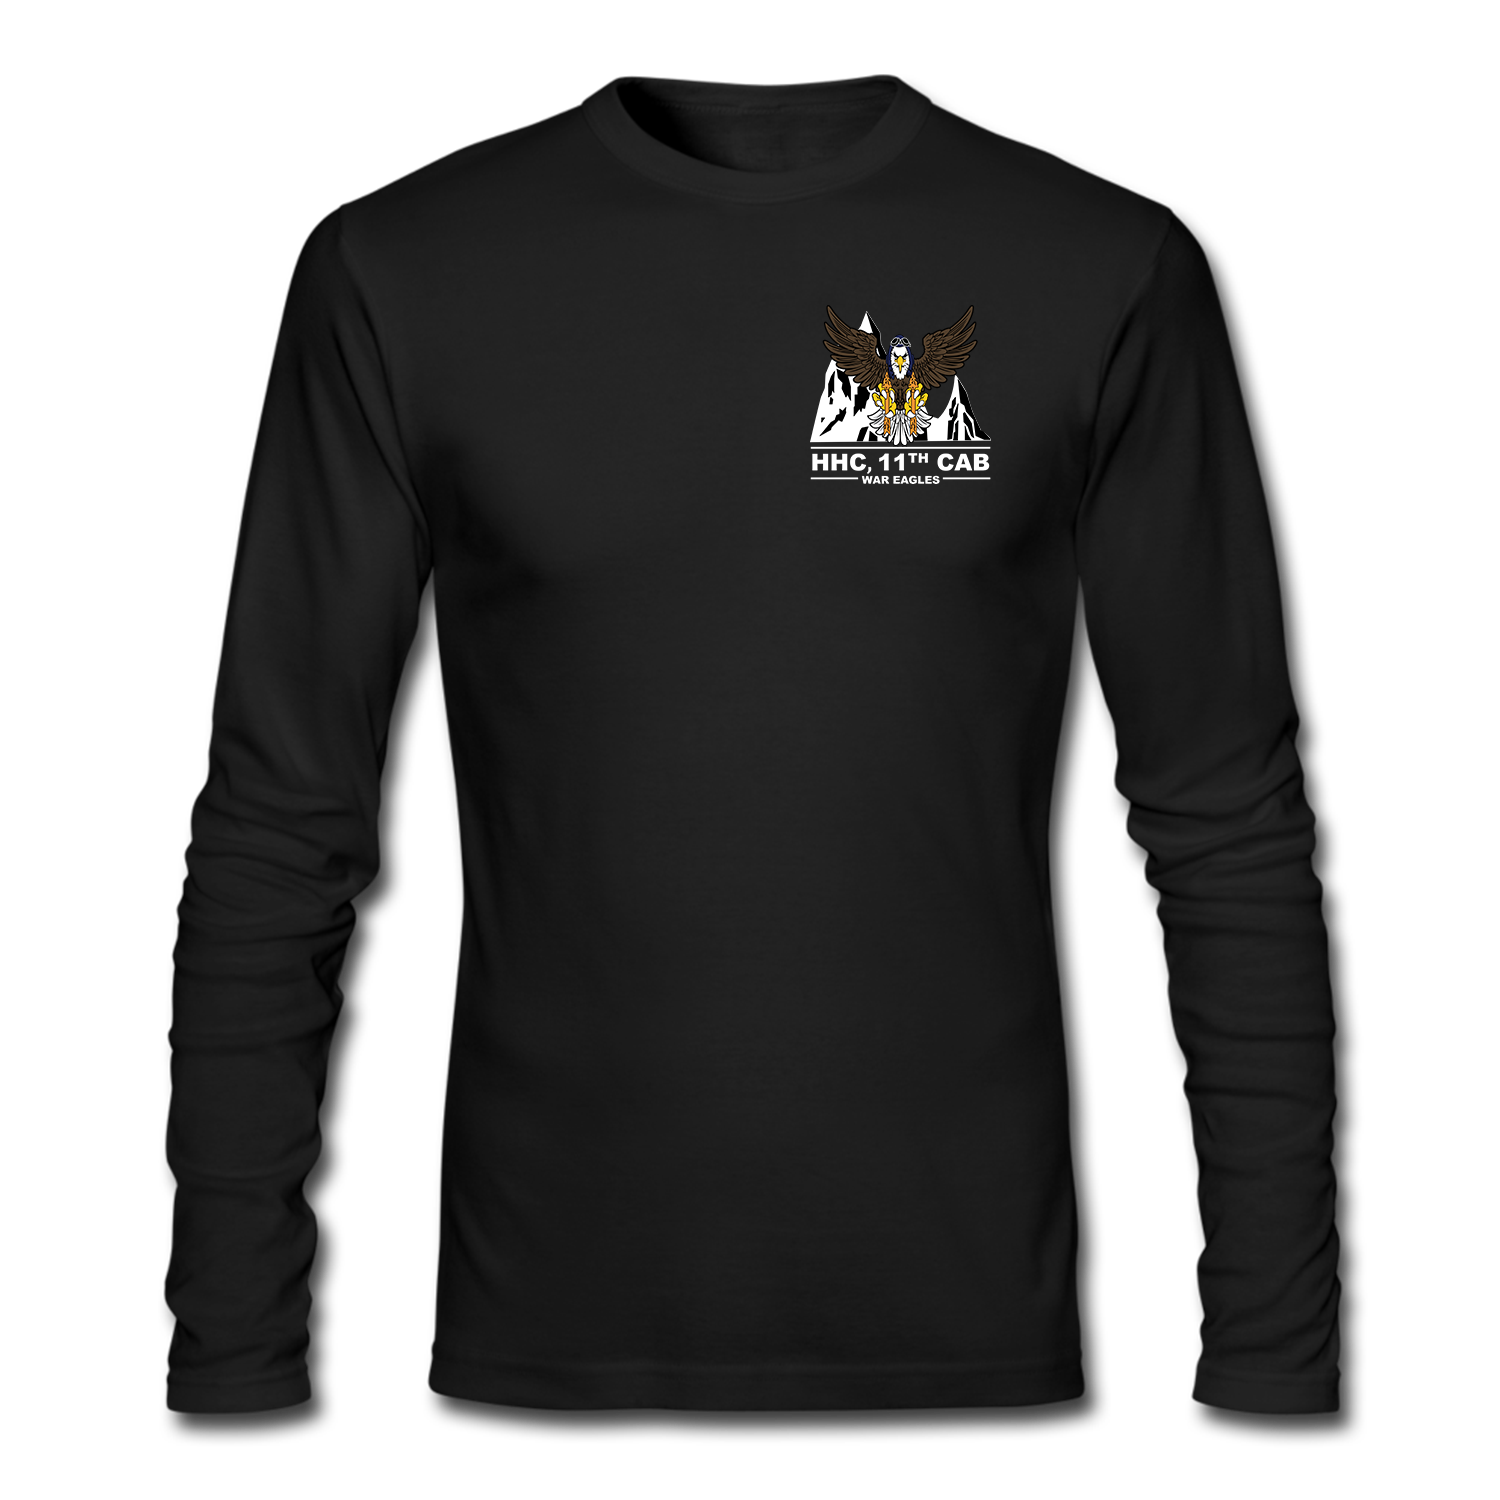 Promolux Hhc, 11th ECab Long Sleeve T-Shirt | Military Unit Shirts | Brotallion M / Black